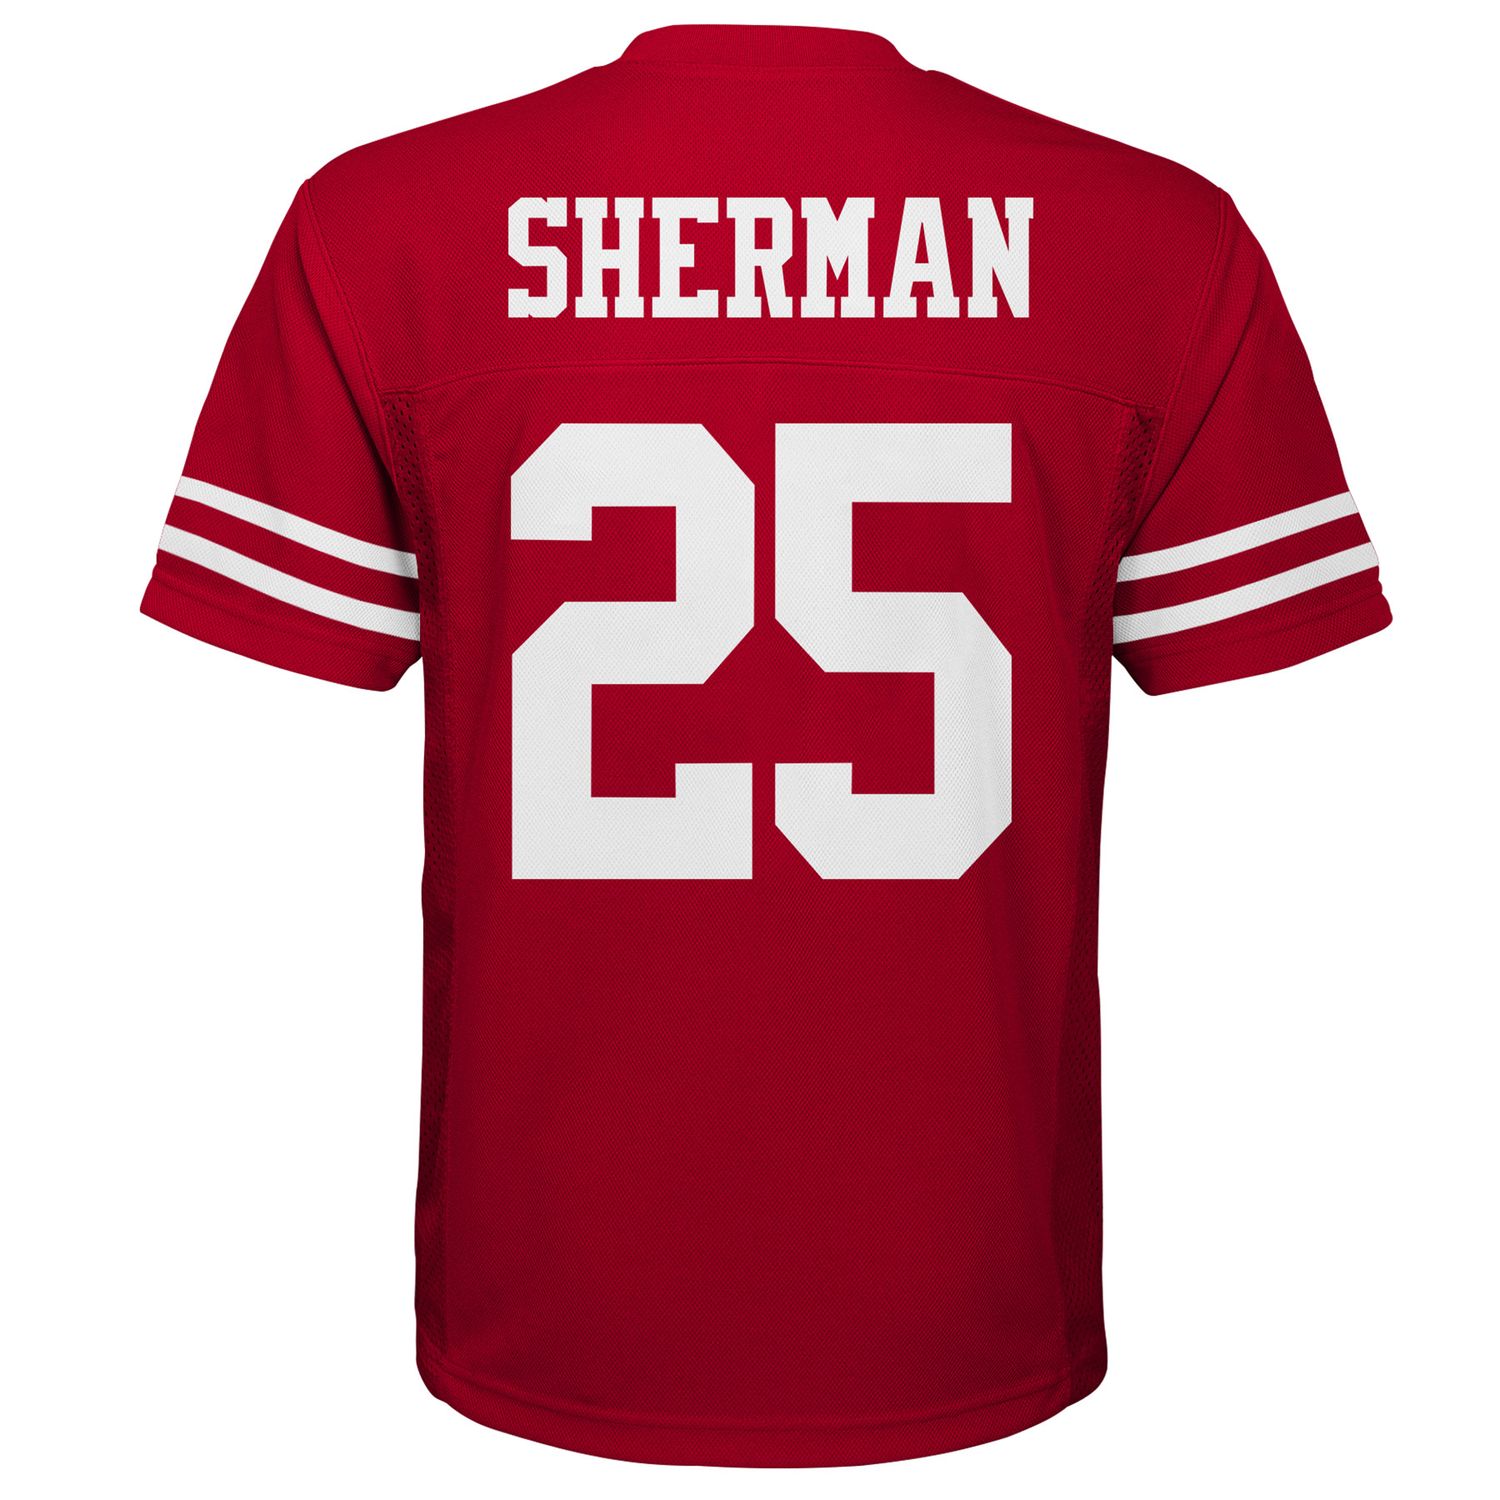 sherman niners jersey